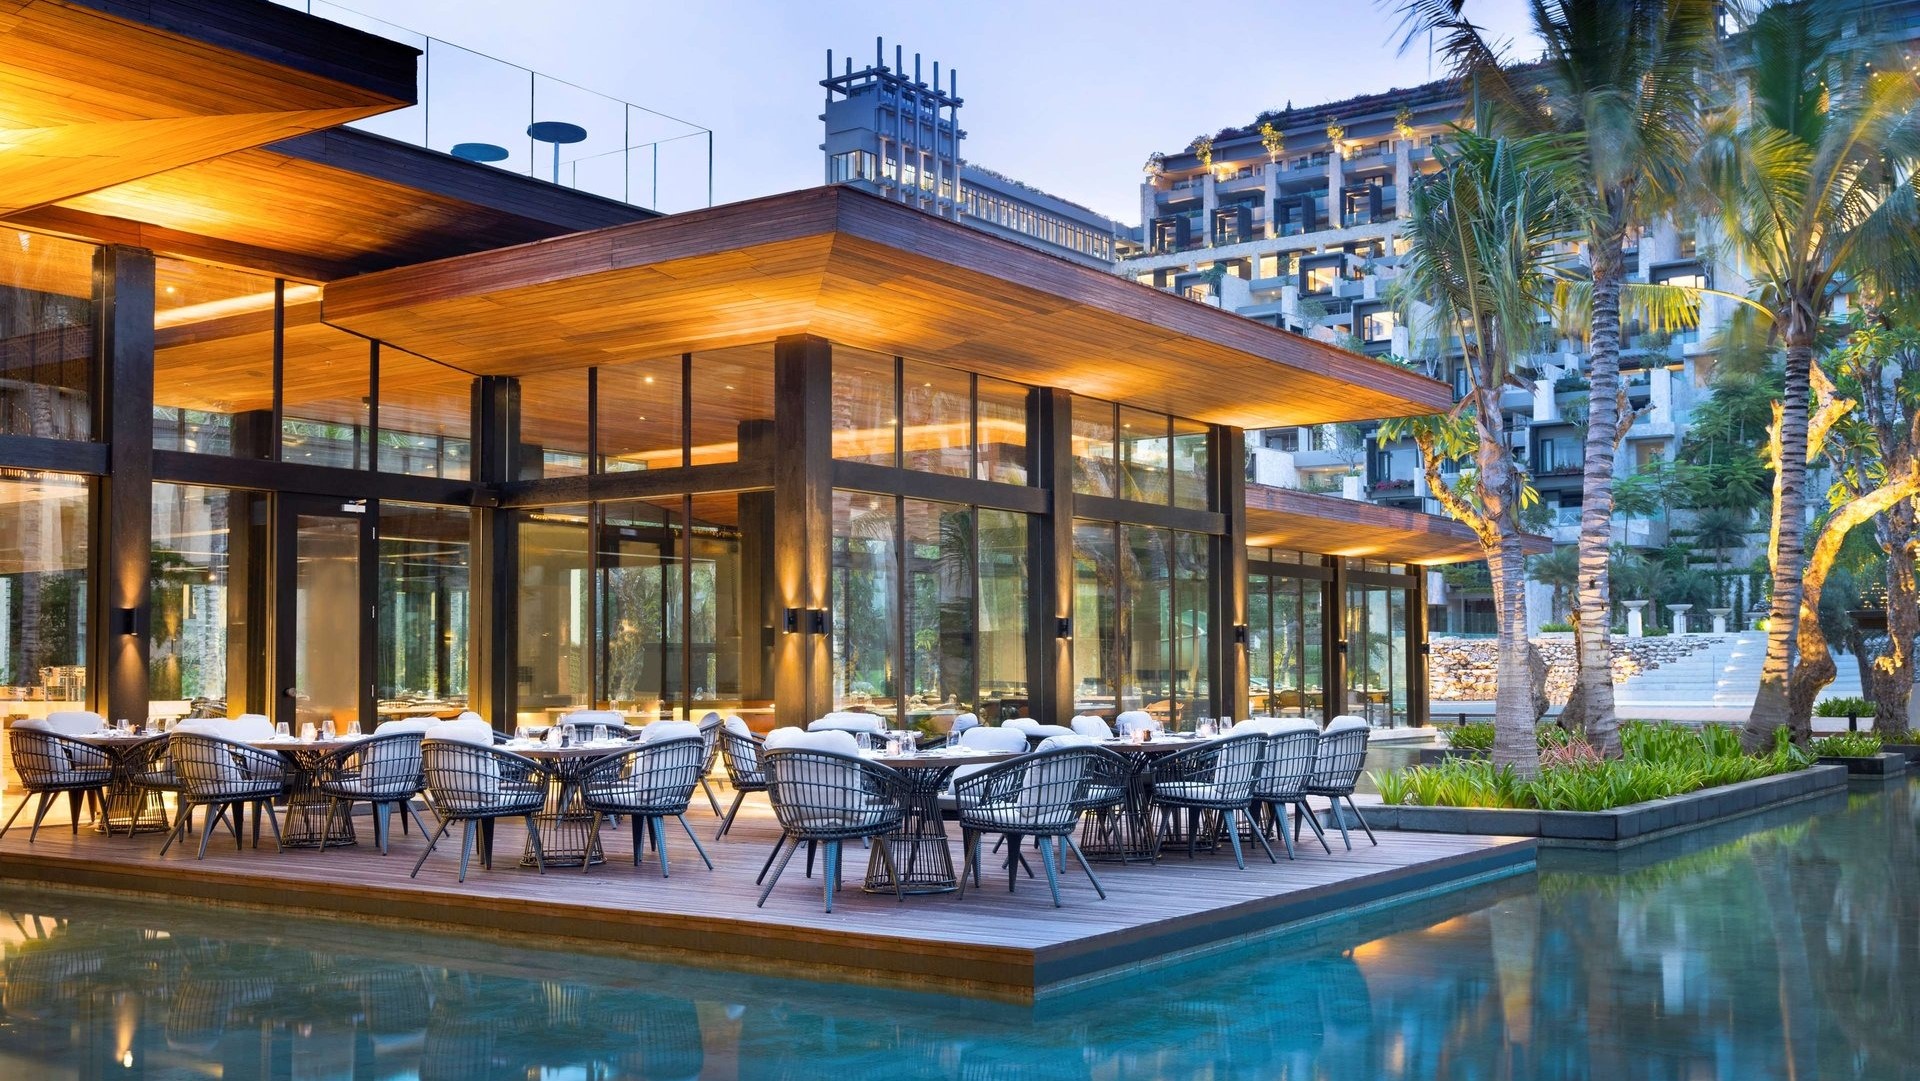 Pala Restaurant & Rooftop Bar